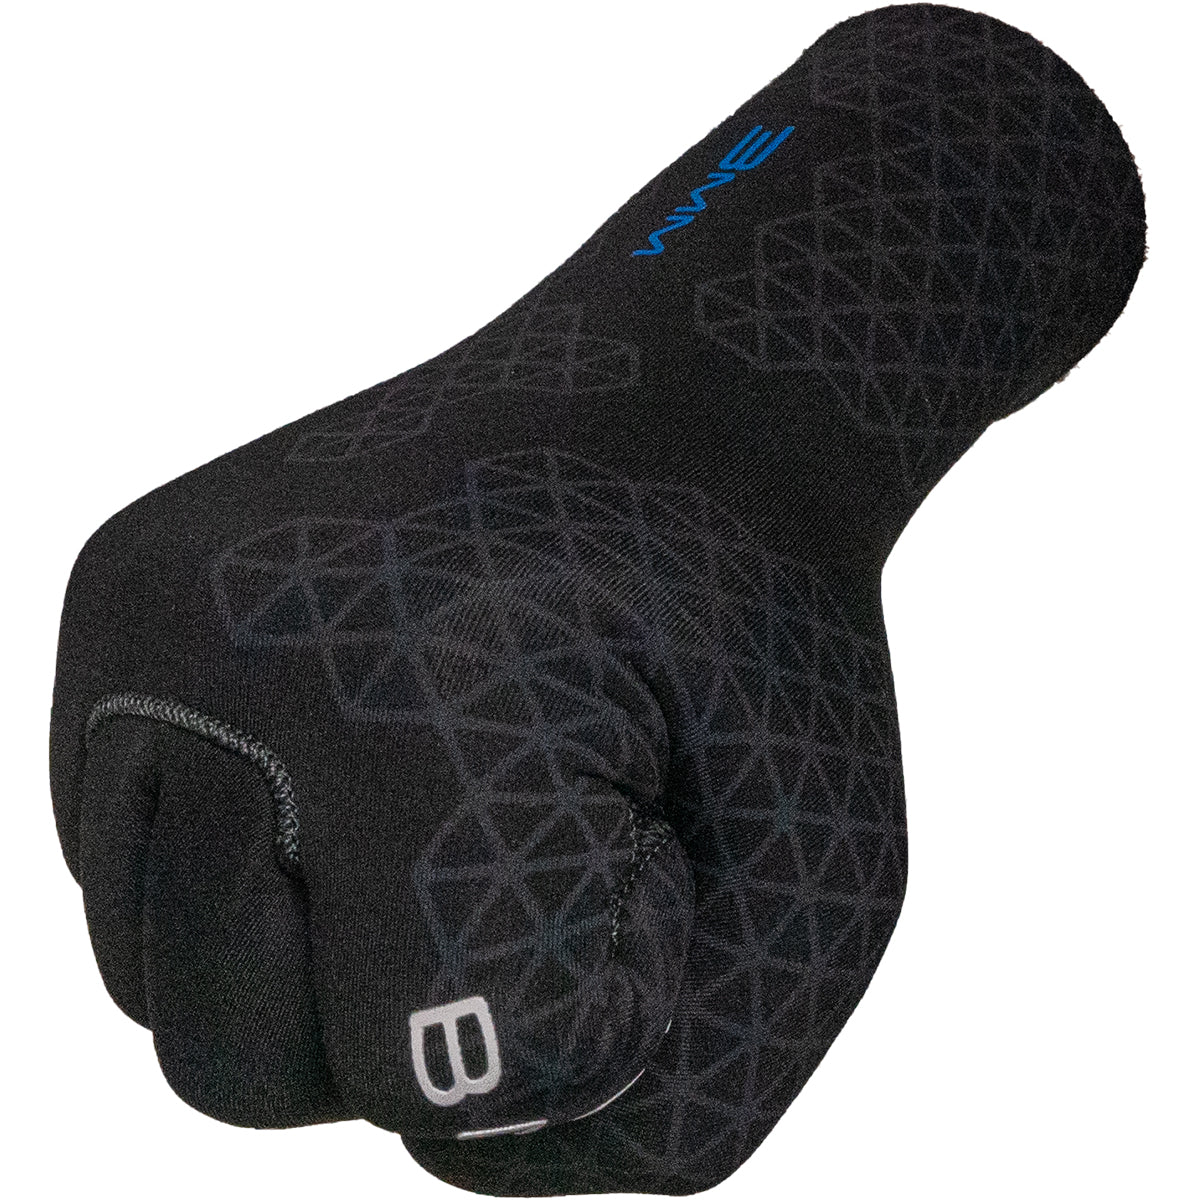 Bare 3mm S-Flex Glove-